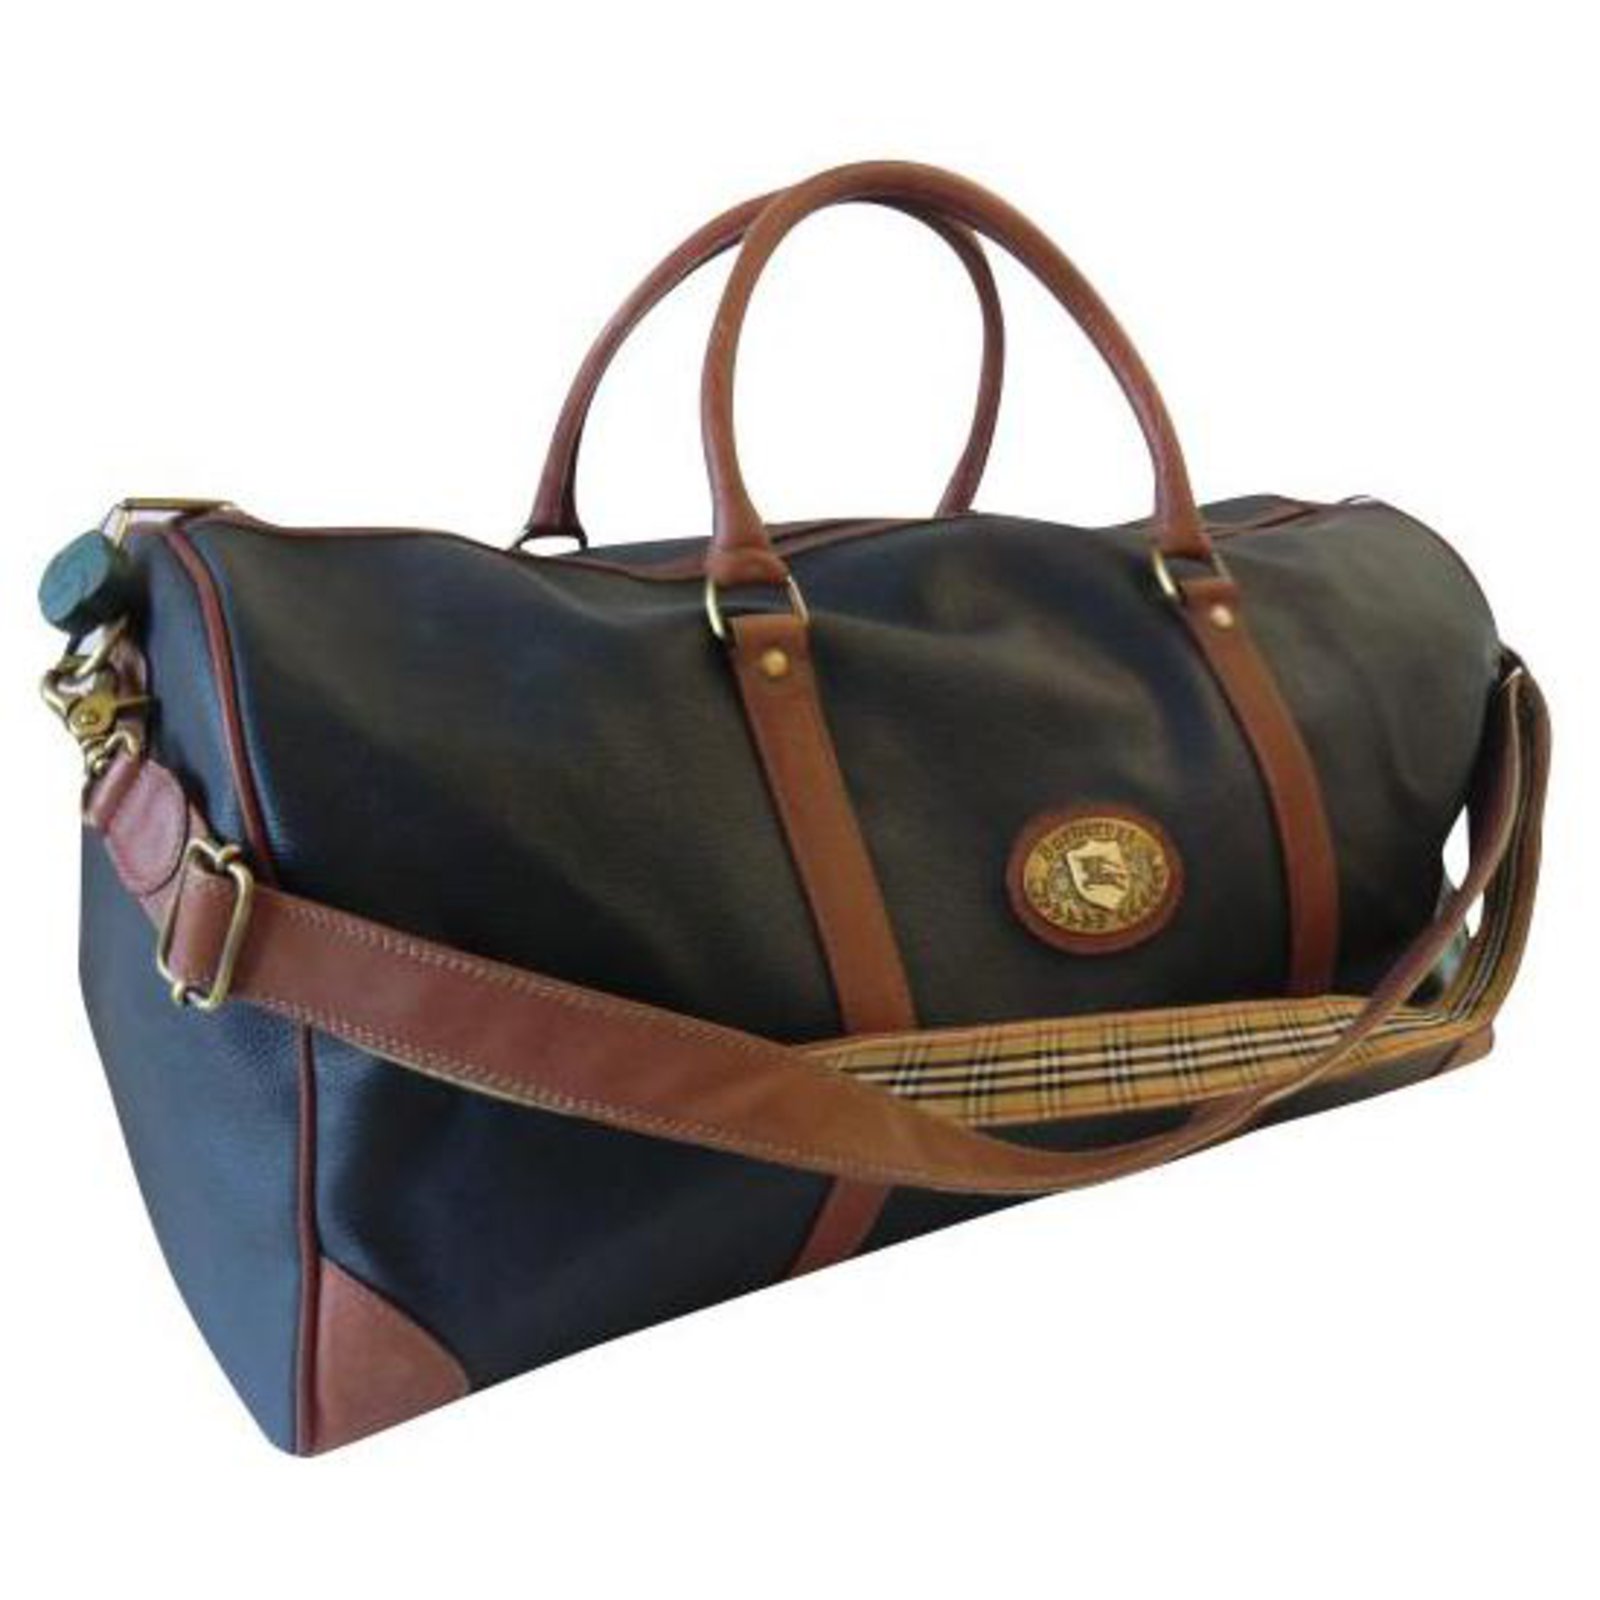 Burberry - Travel bag - Catawiki